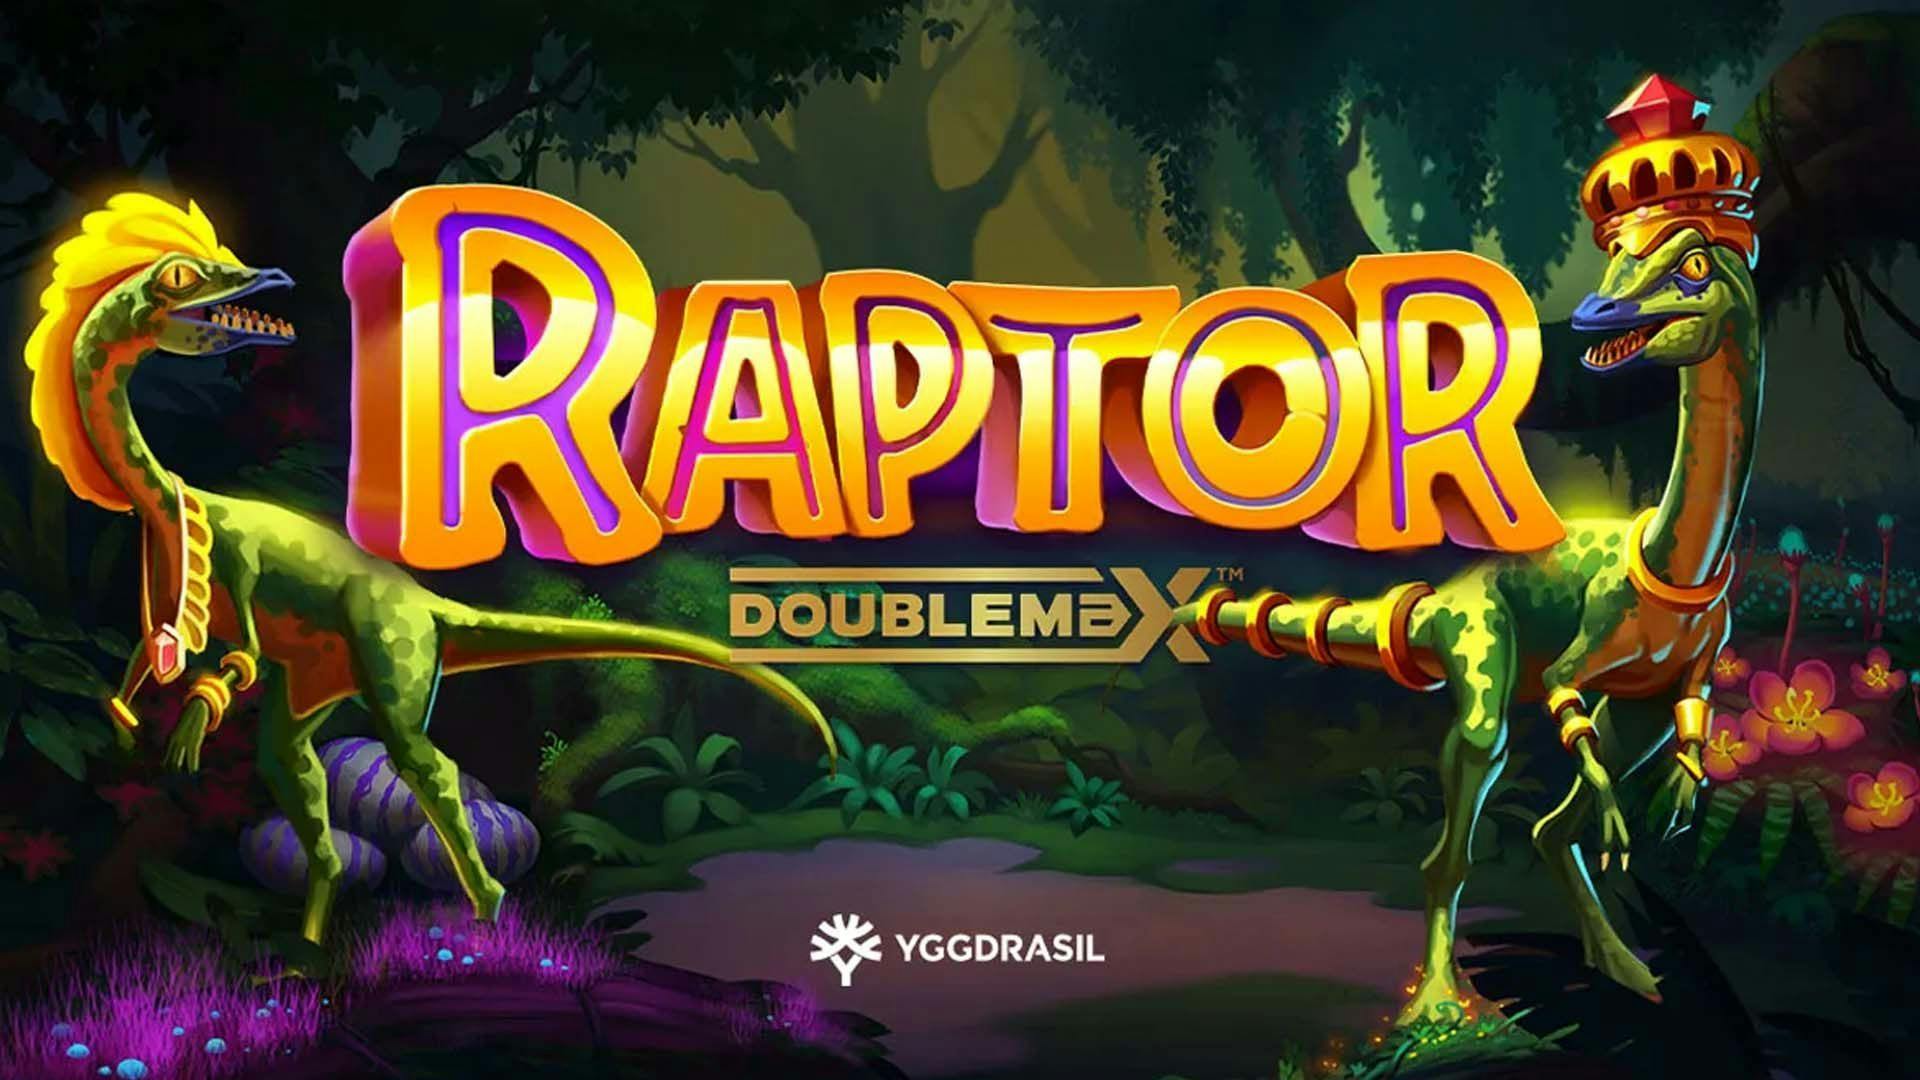 Raptor DoubleMax Slot Machine Online Free Game Play